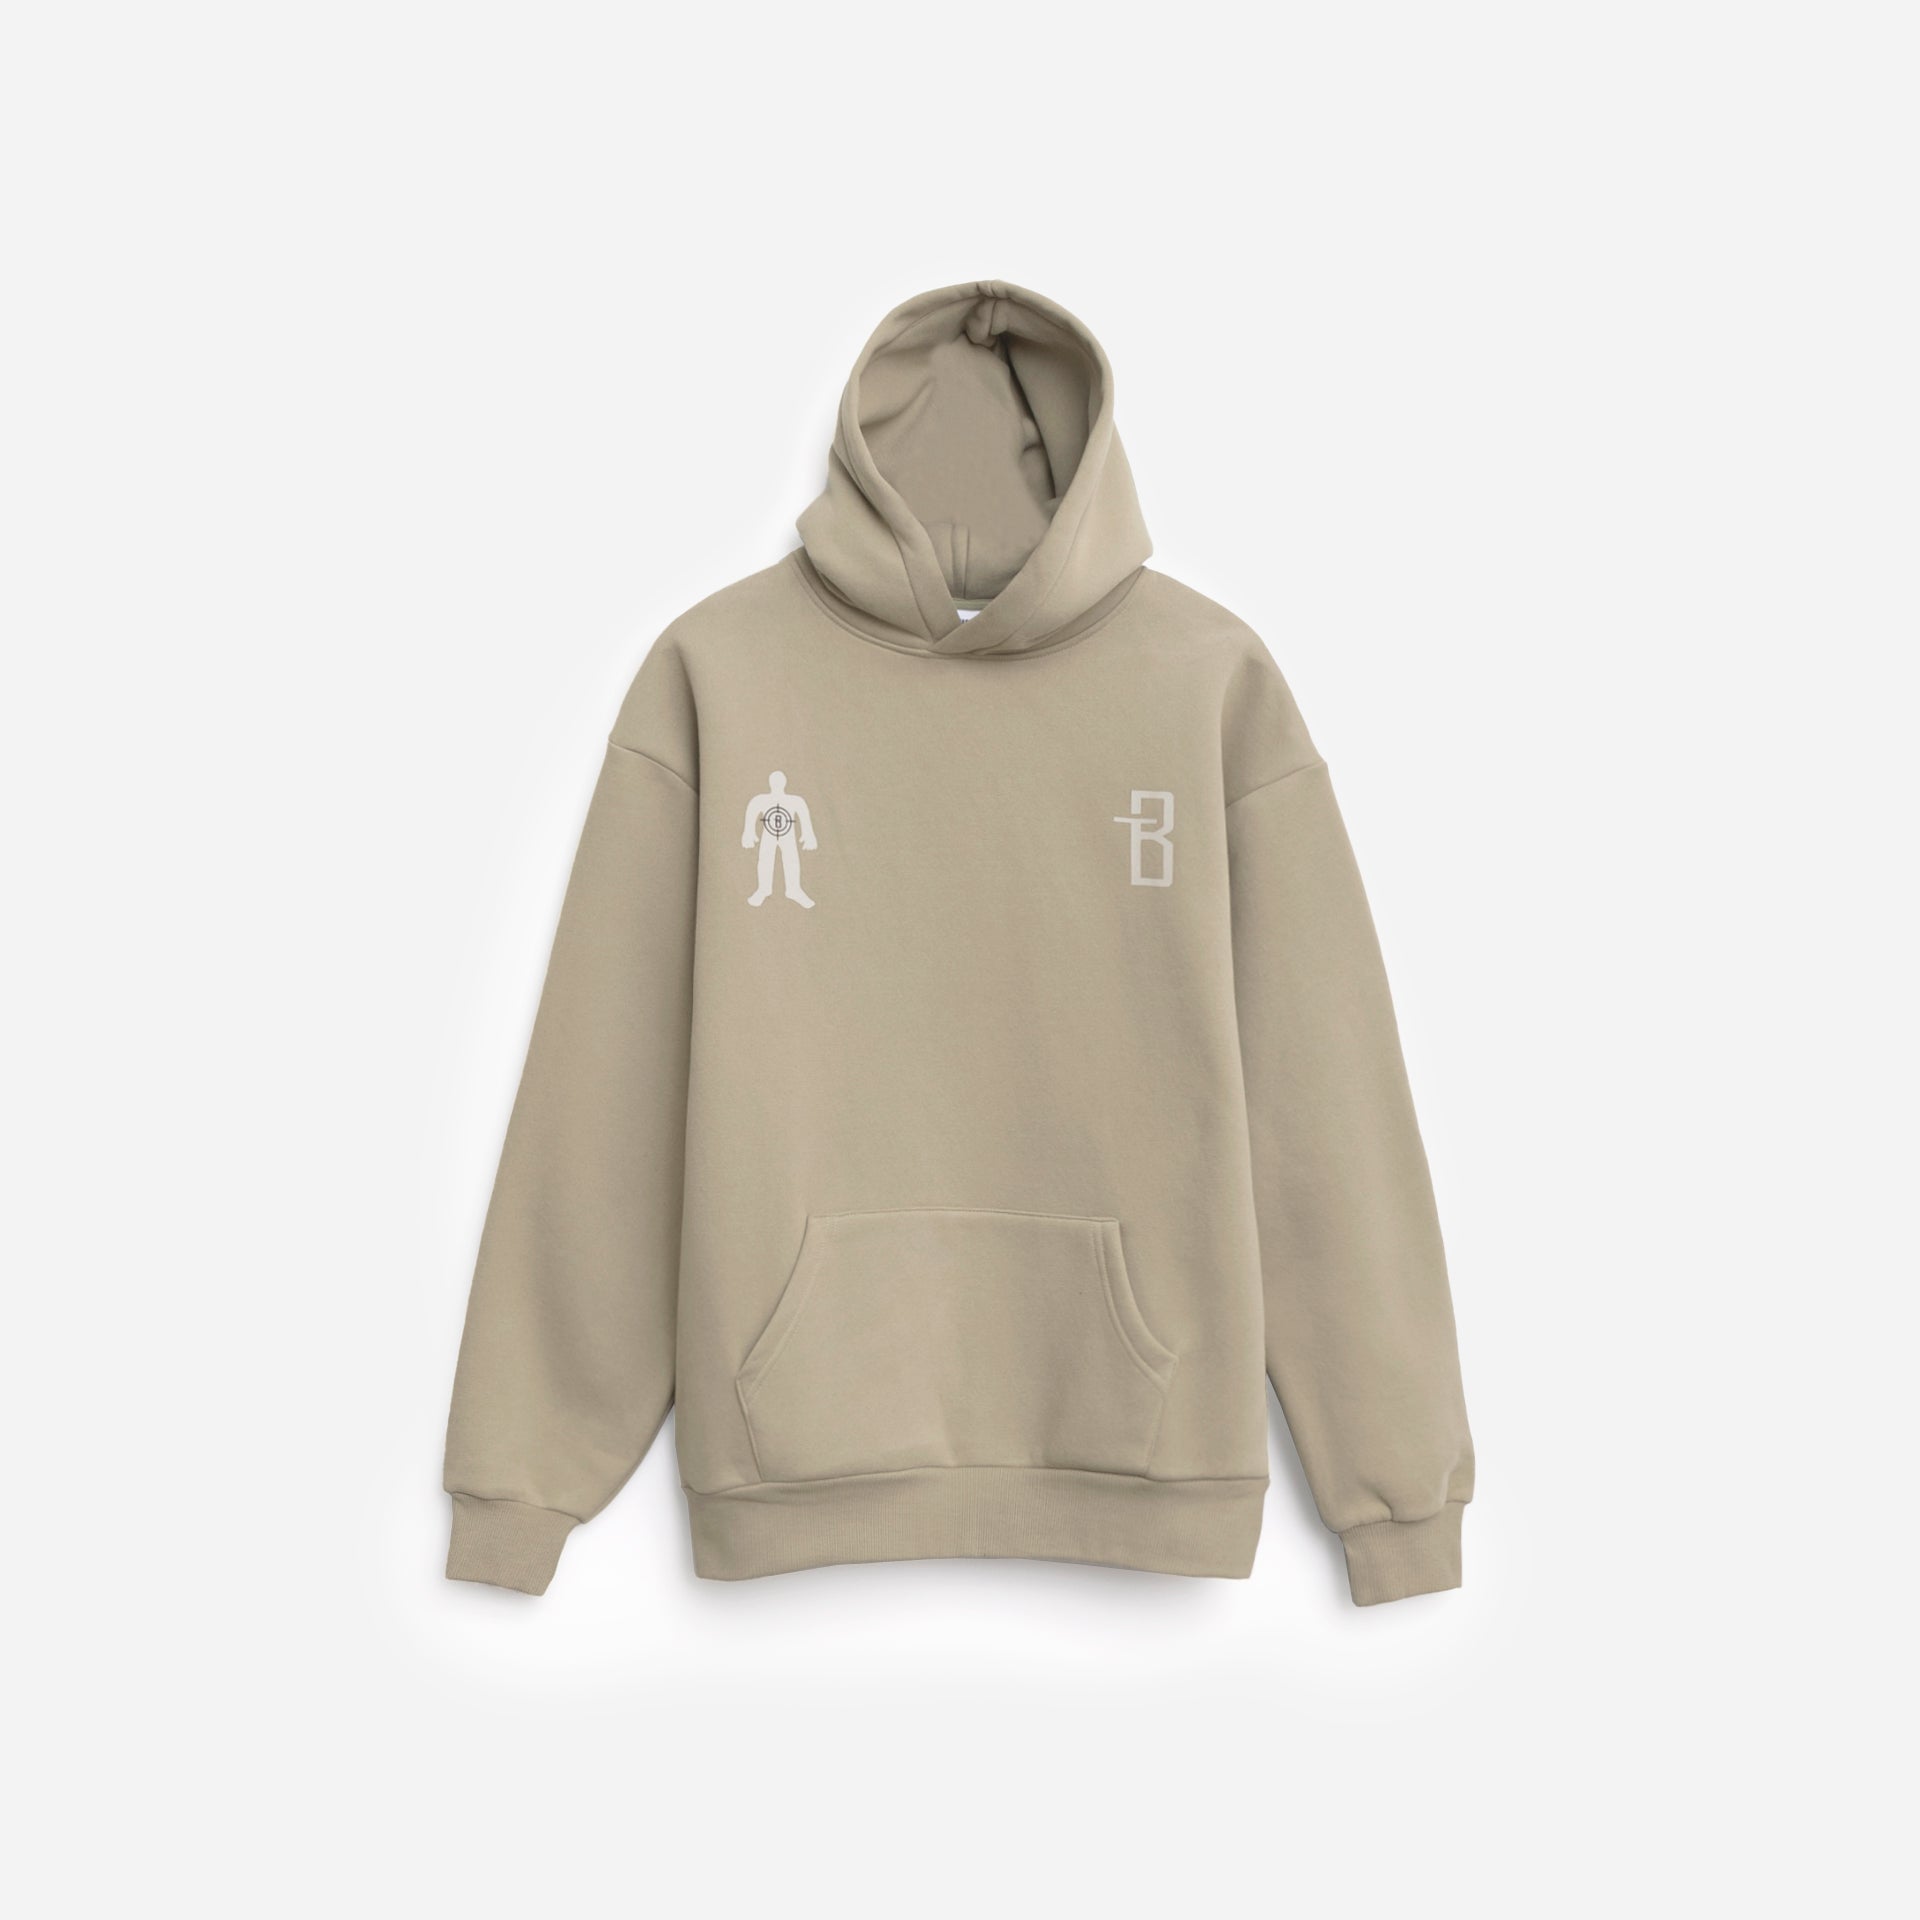 Khaki hoodie By Brandtionary